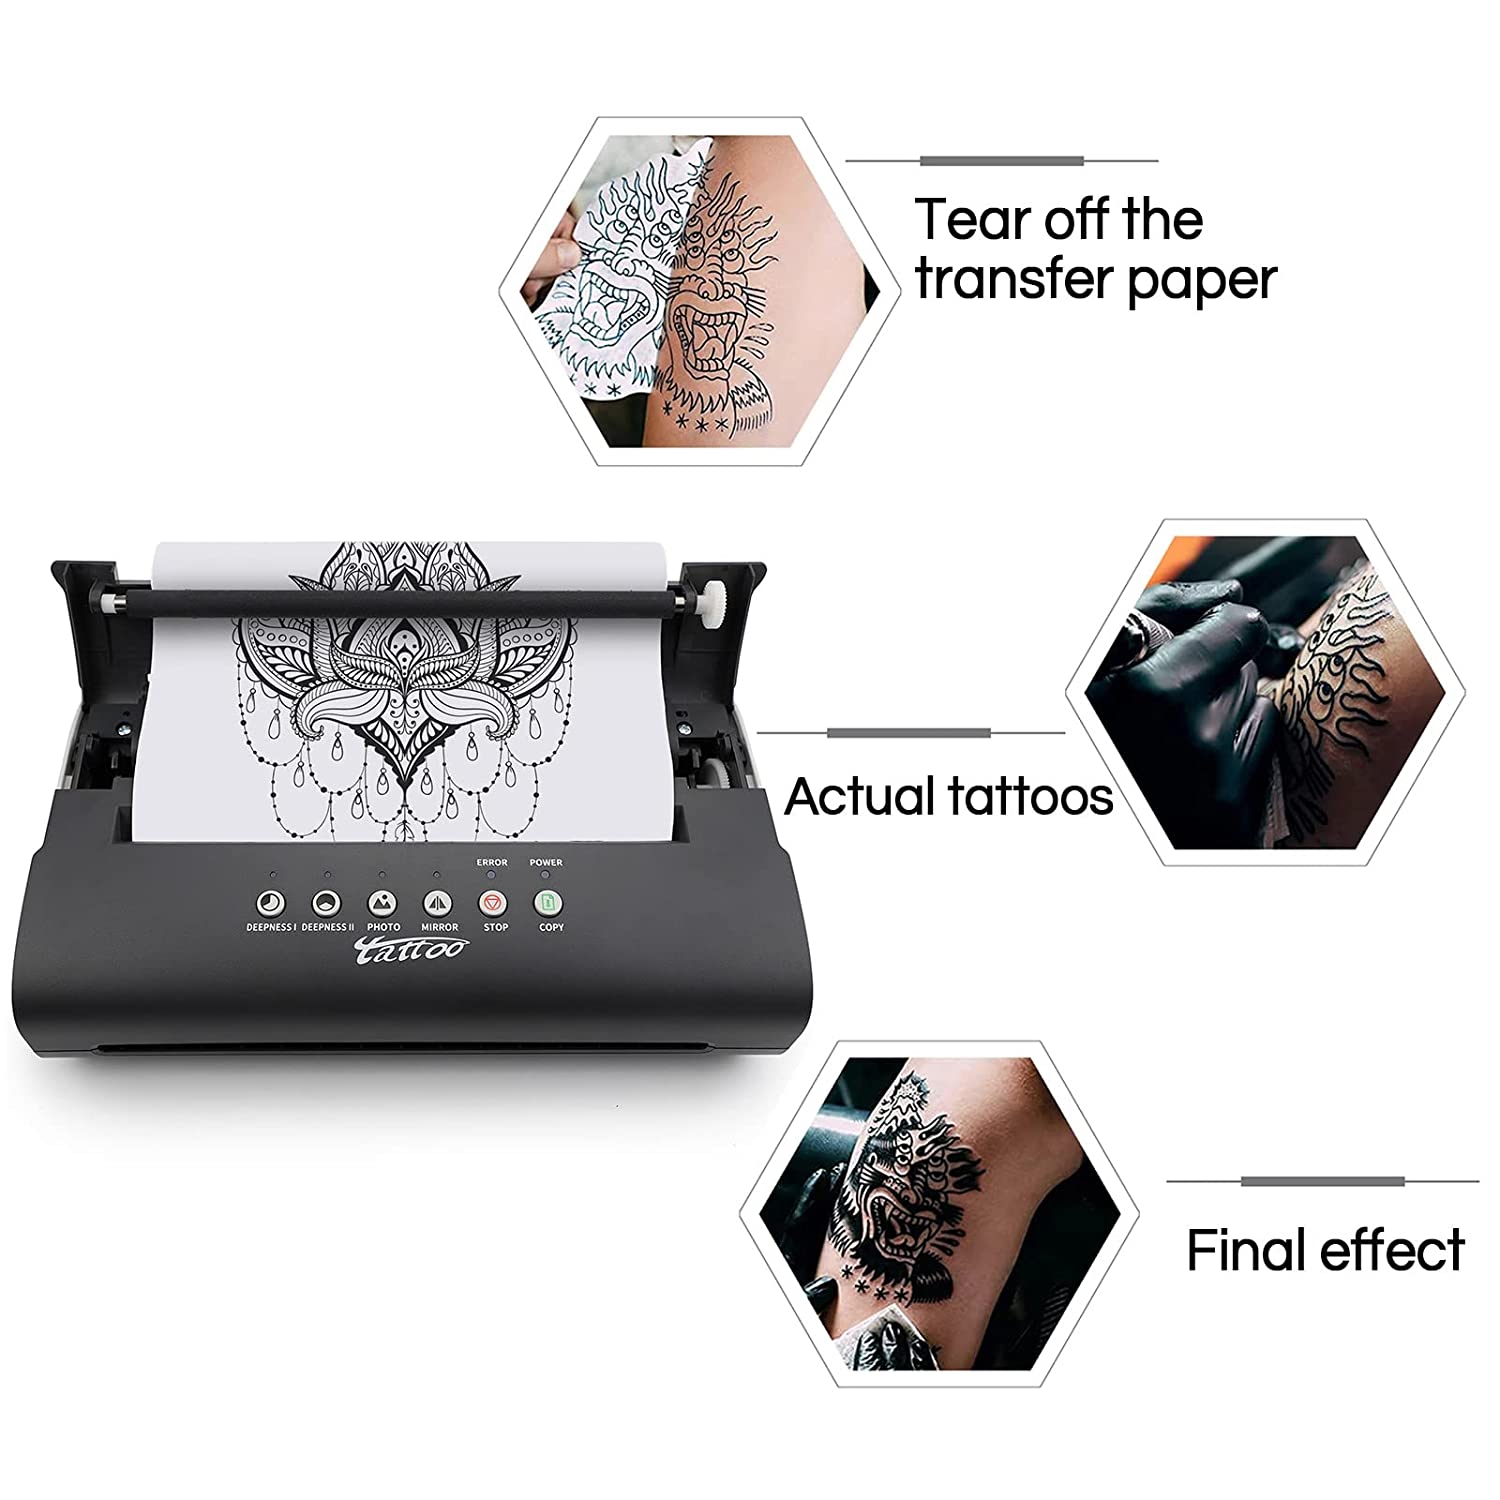 LifeBasis Tattoo Transfer Stencil Machine Thermal Copier Kit Tattoo Printer  with 20pcs Tattoo Stencil Transfer Paper for Men Women, Upgraded Version